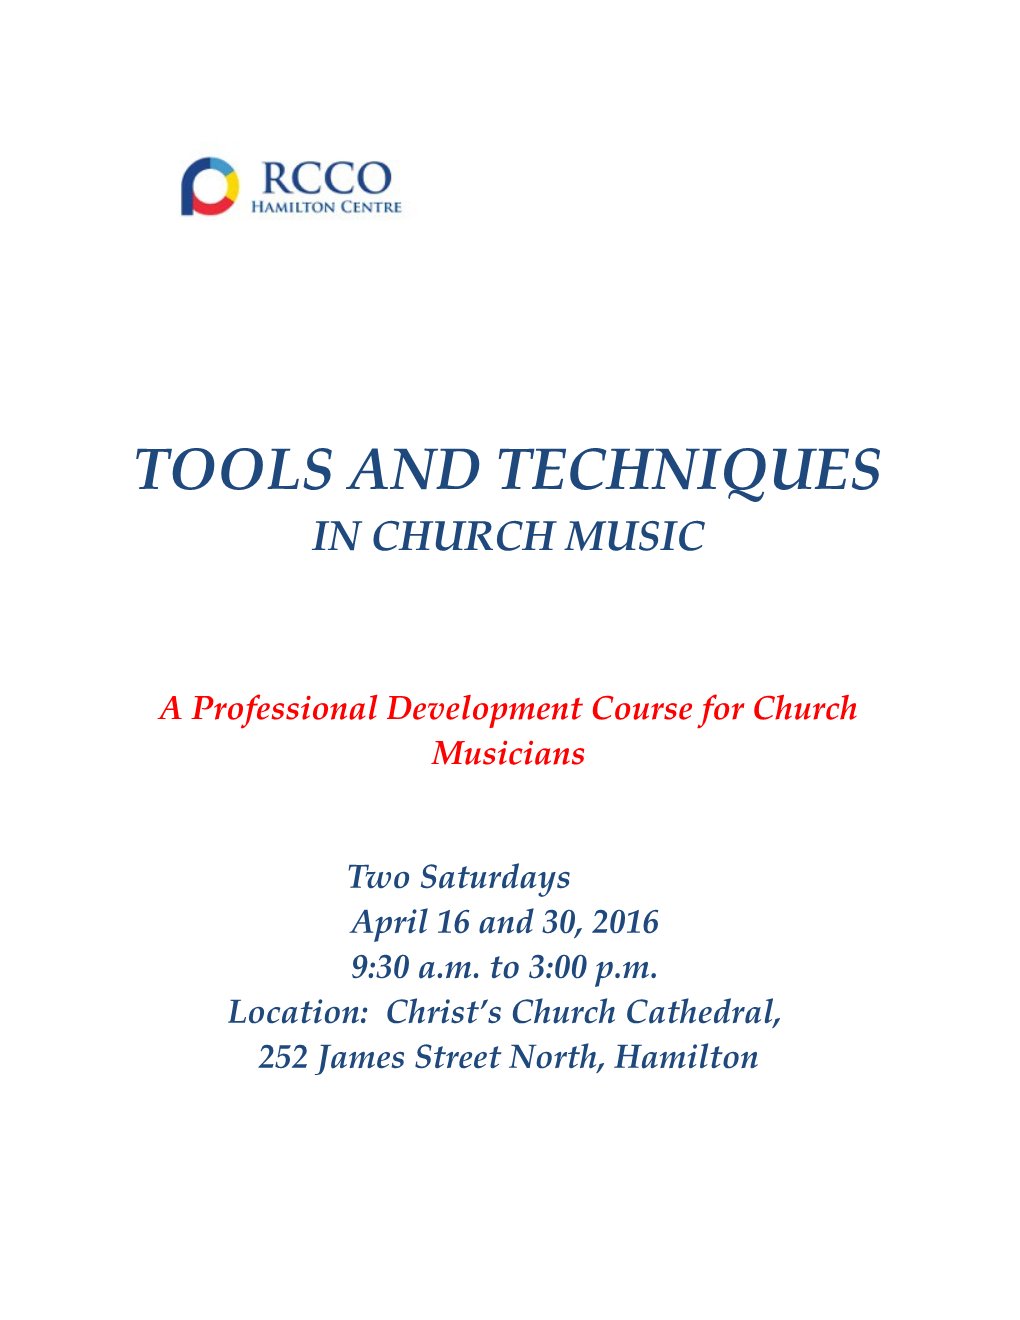 A Professional Development Course for Church Musicians